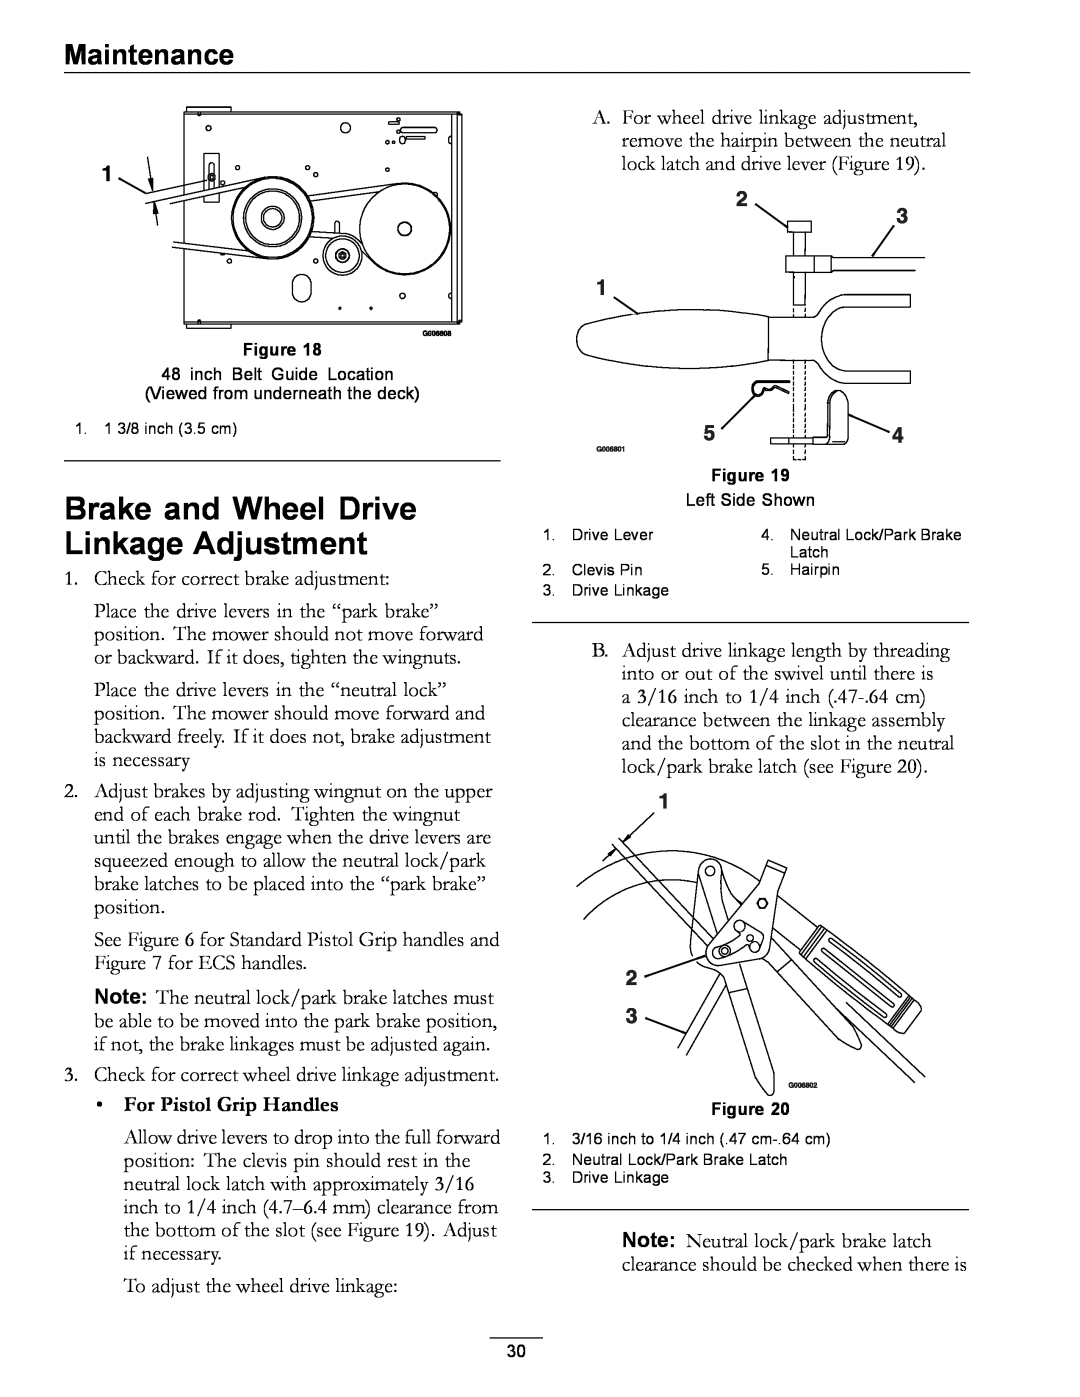 Exmark 4500-352 manual Brake and Wheel Drive Linkage Adjustment, Maintenance, For Pistol Grip Handles 